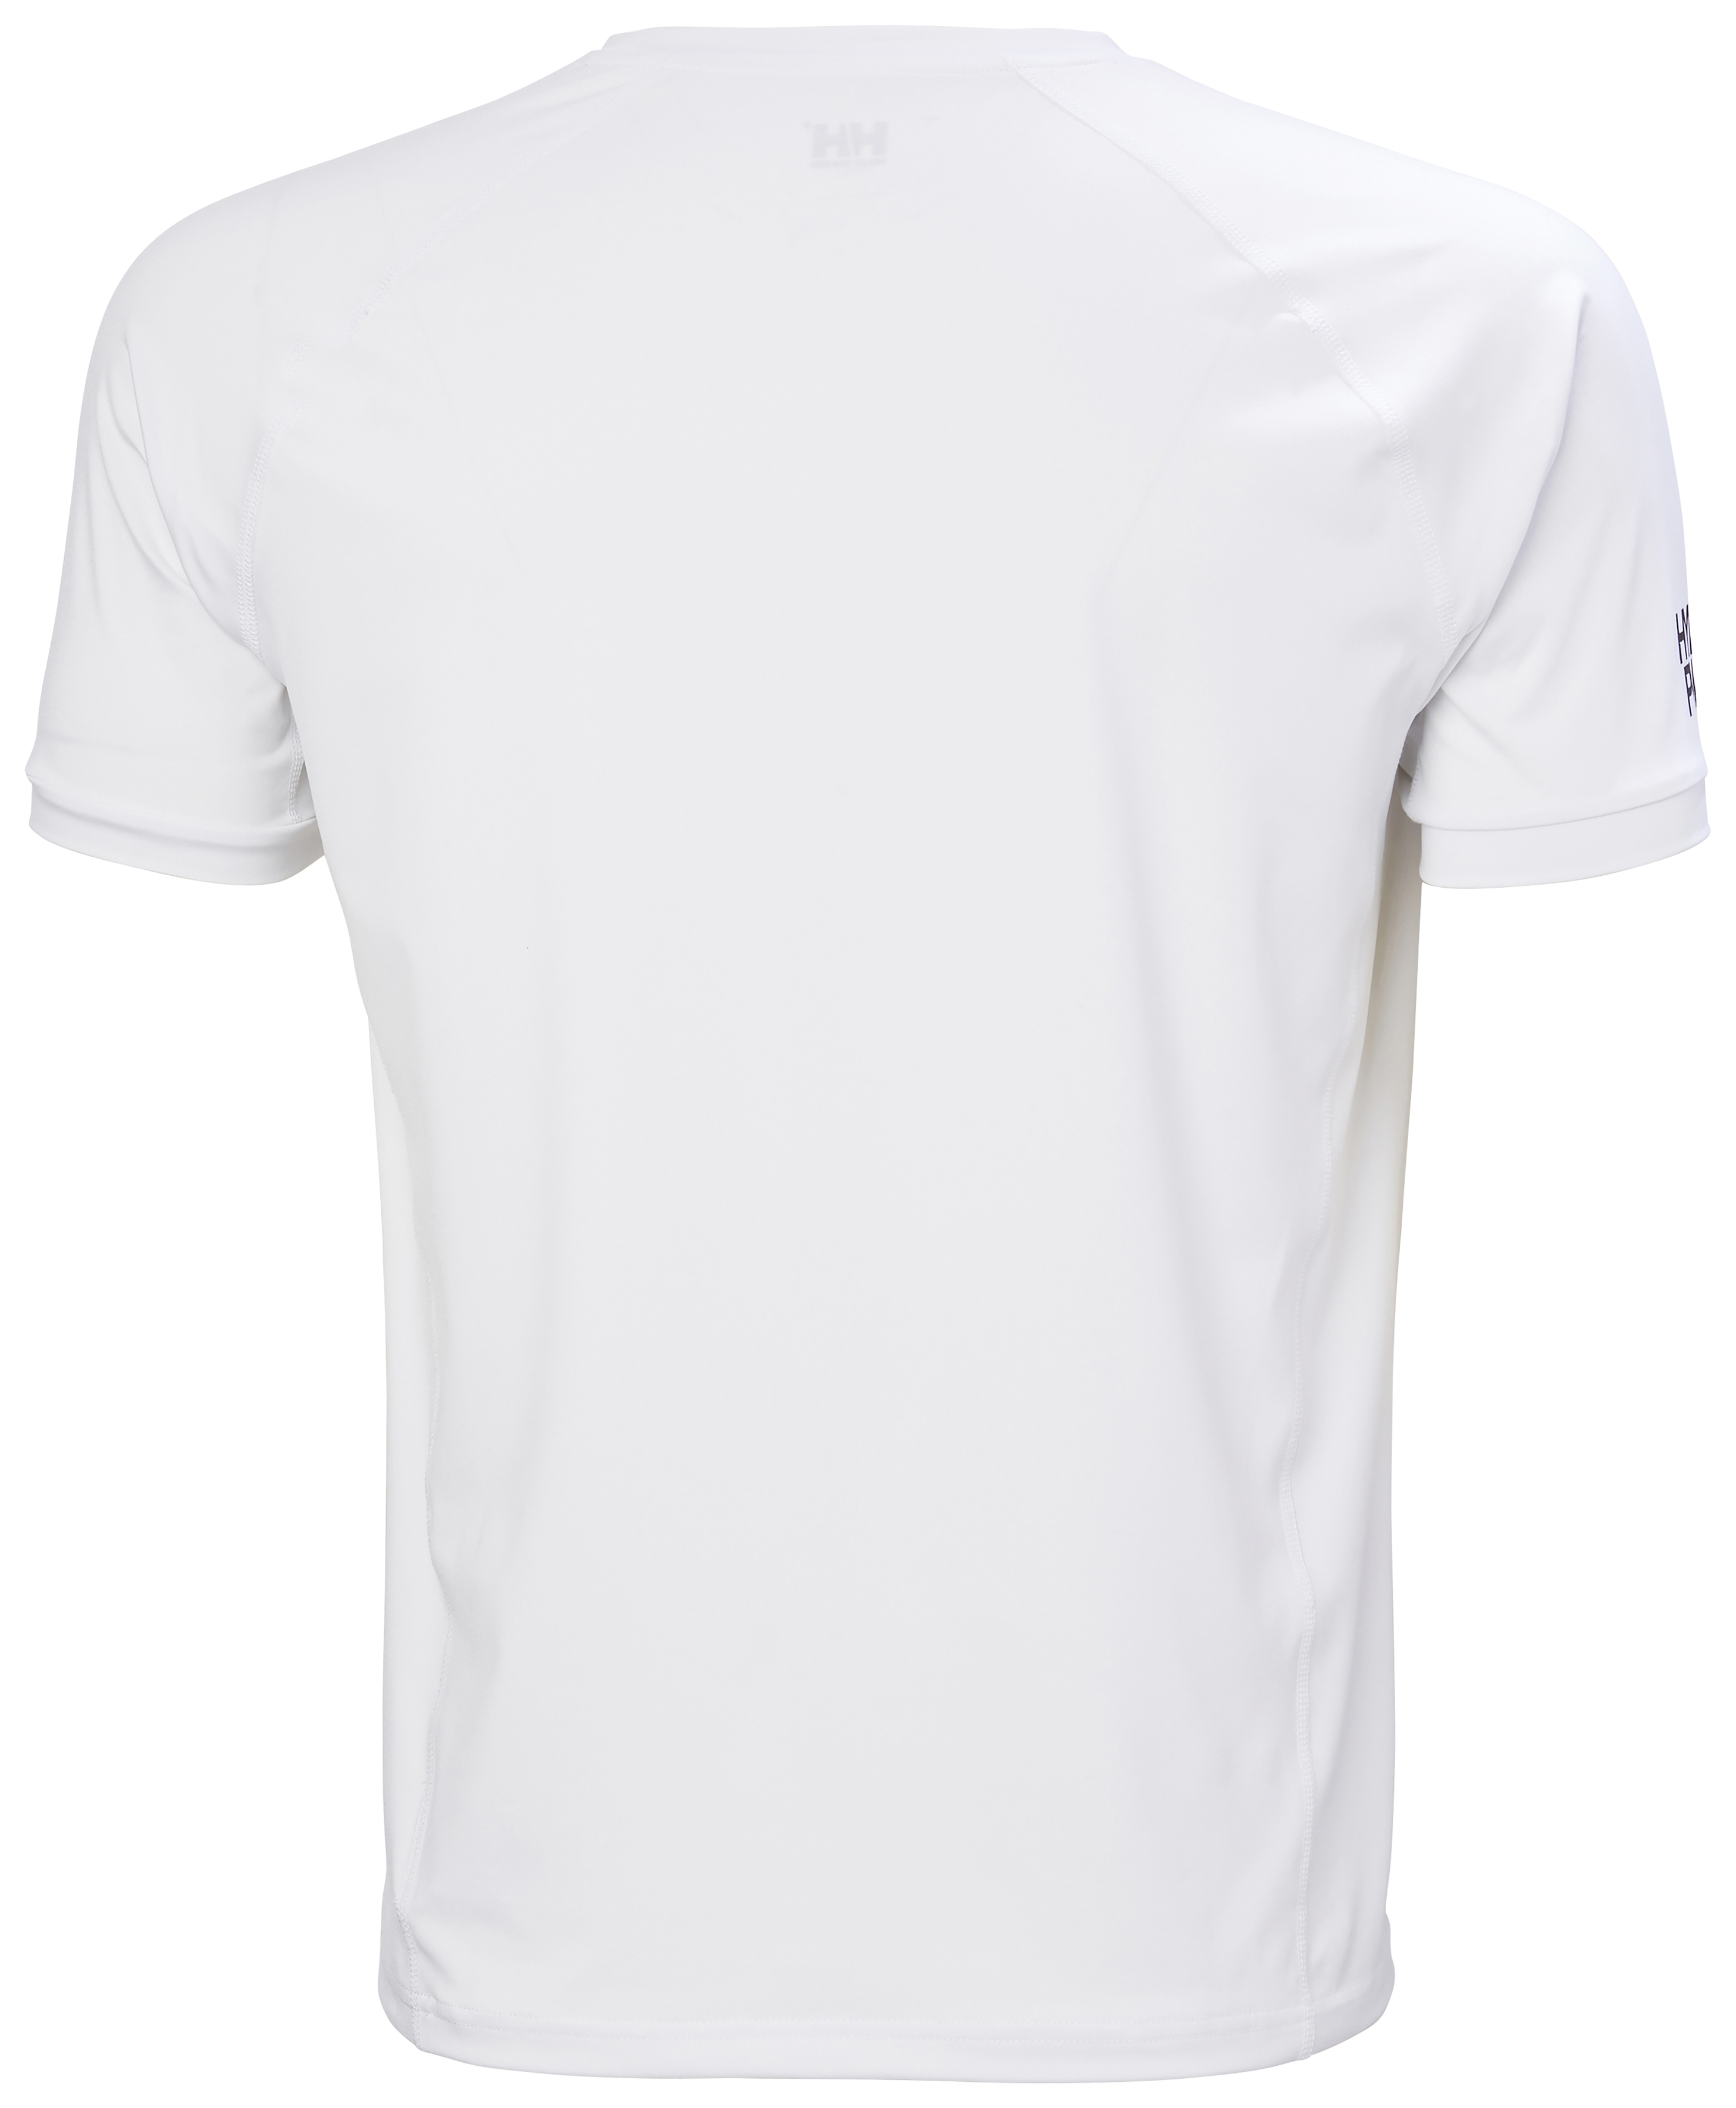 HH HP Ocean T-Shirt weiß